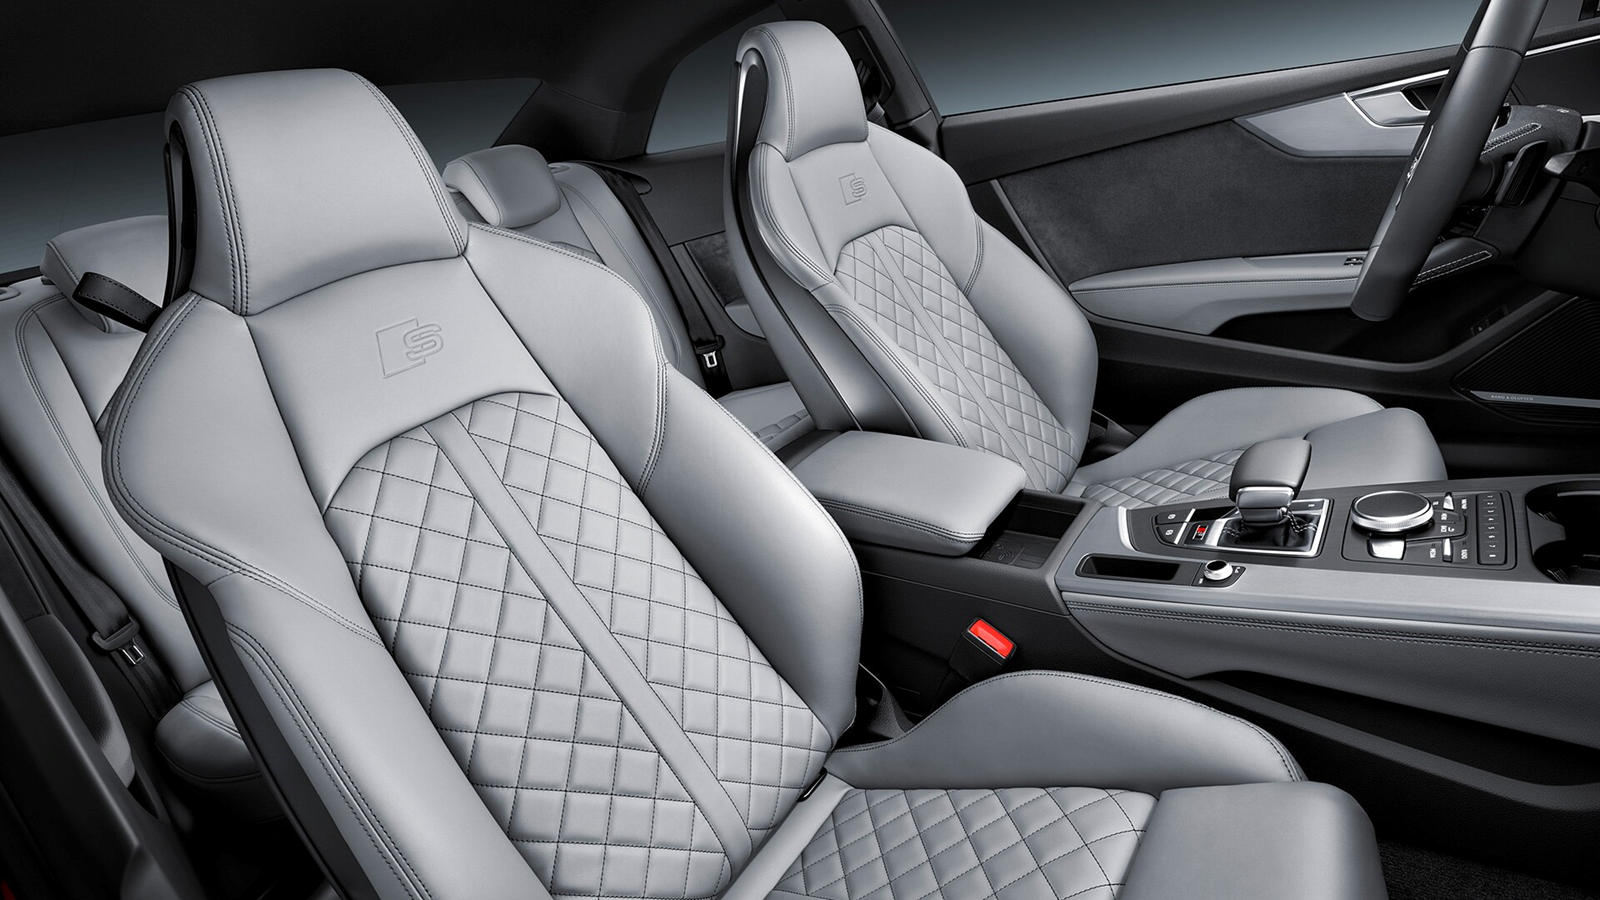 Audi S5 interior - Seats